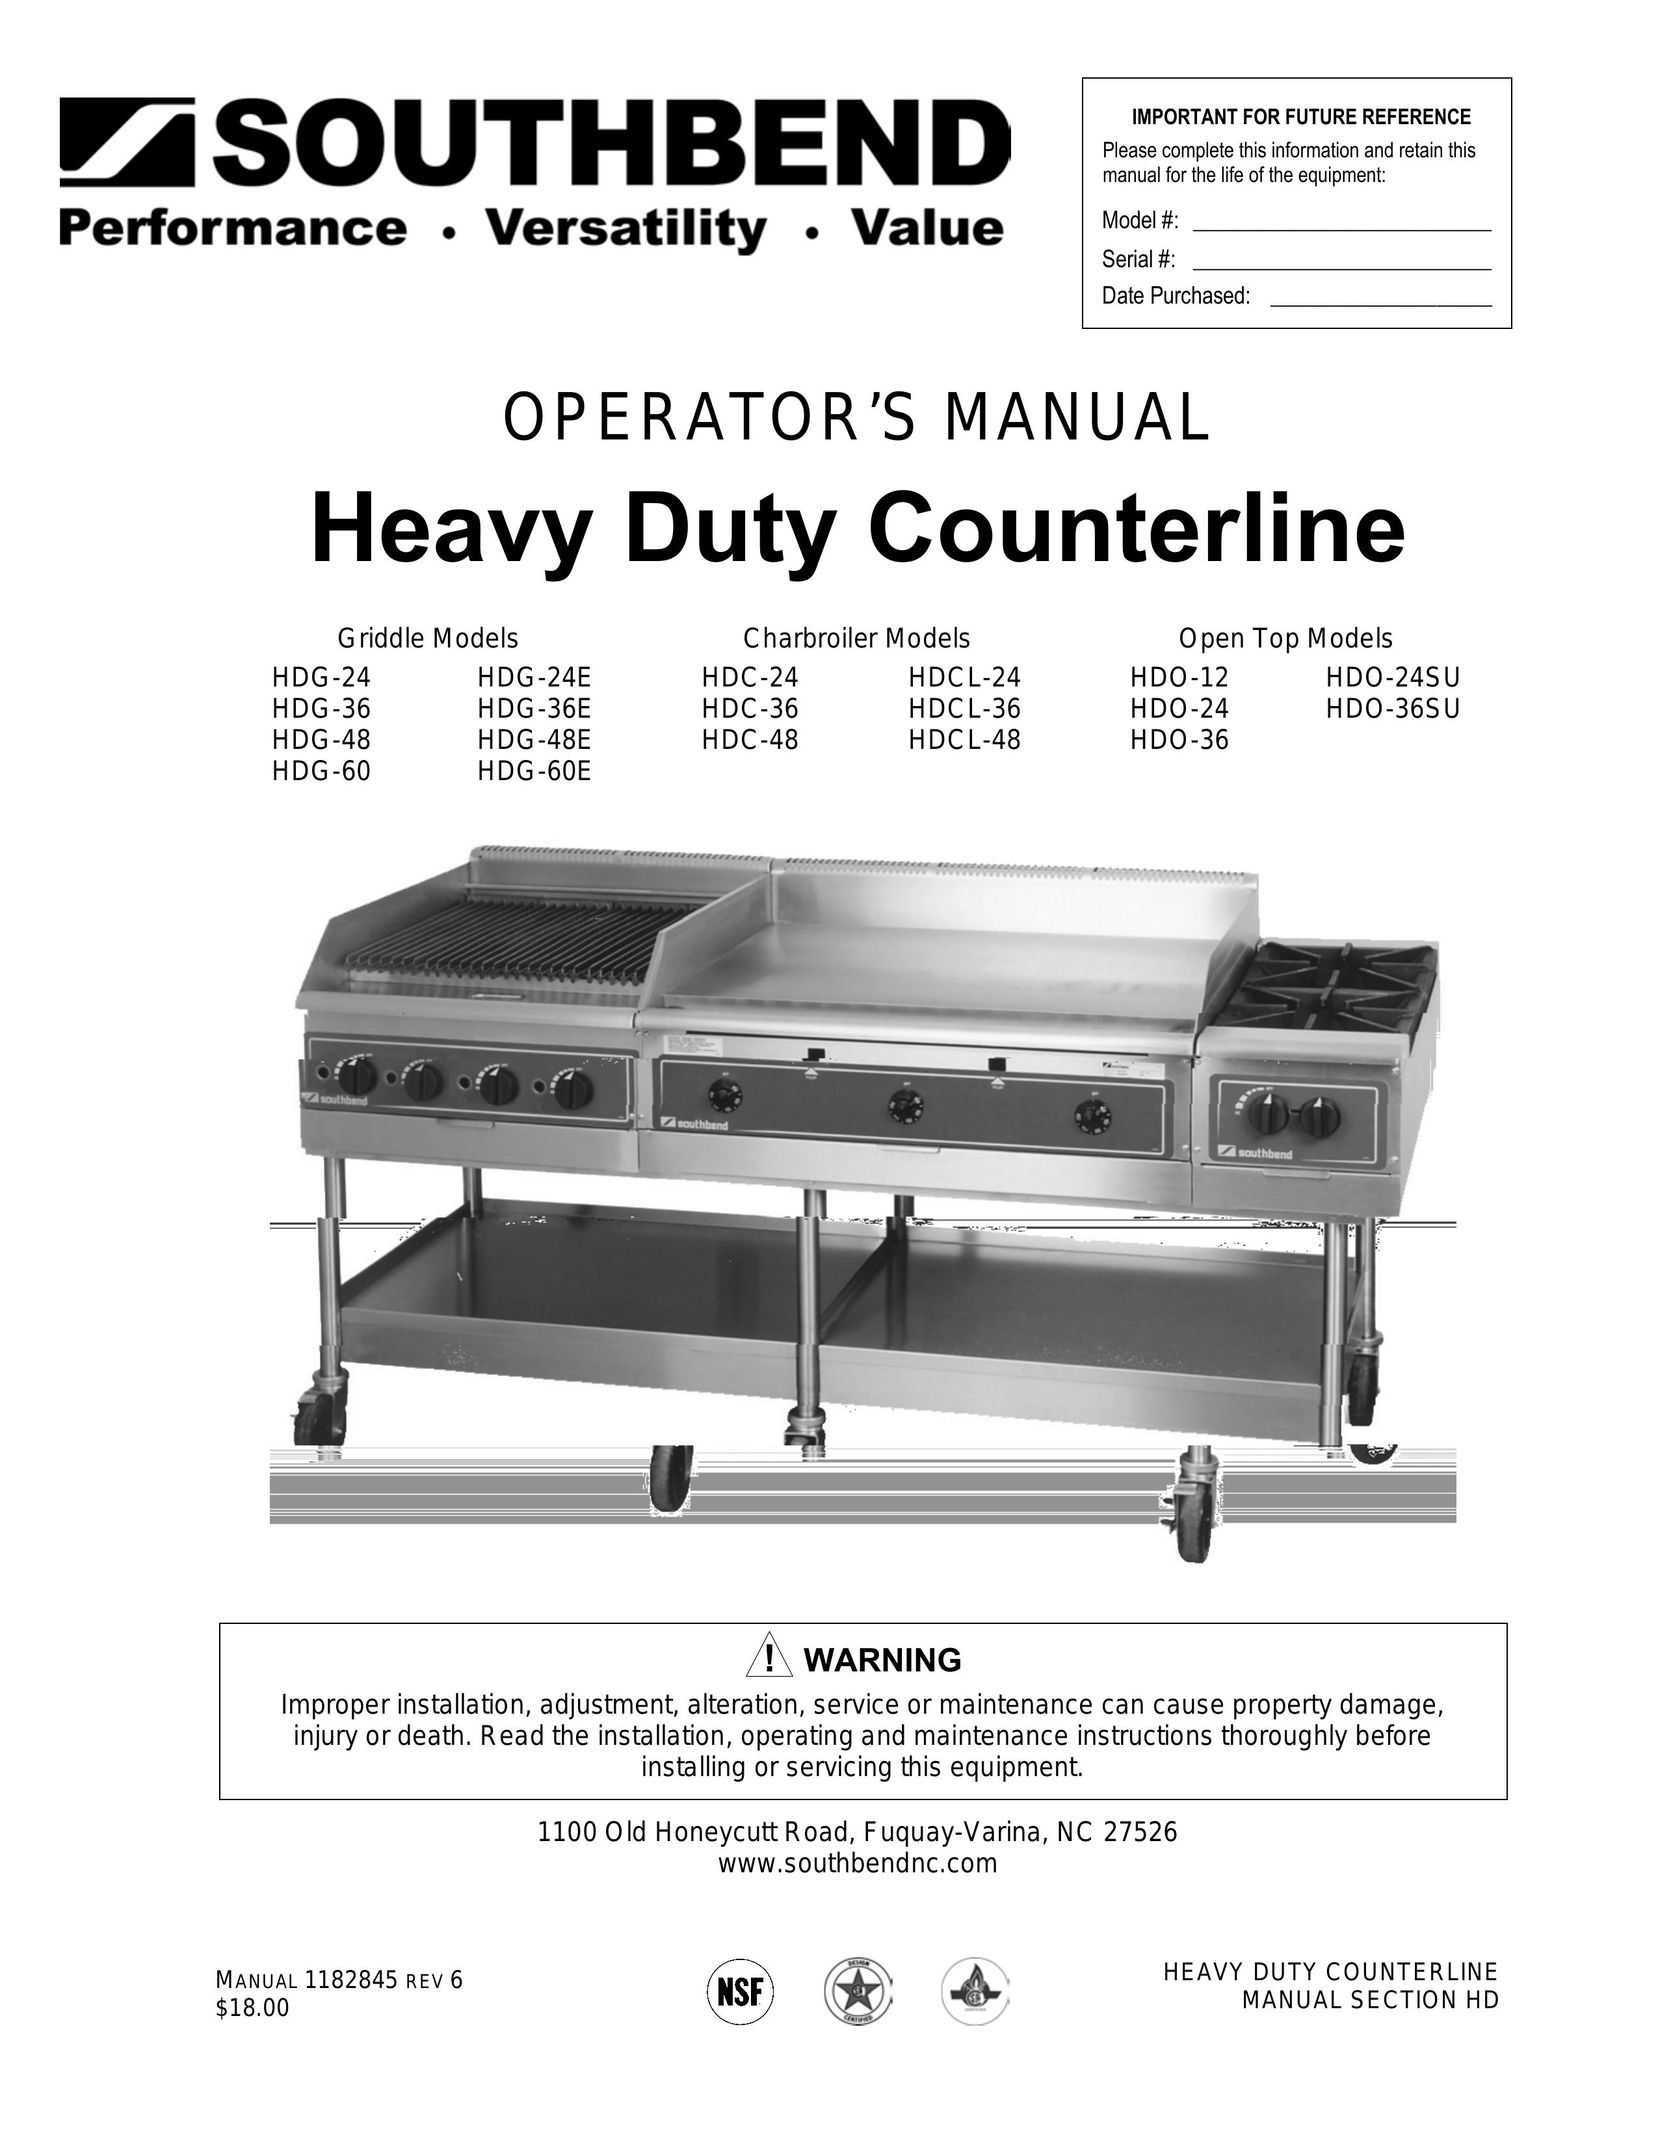 Southbend HDO-36SU Cooktop User Manual